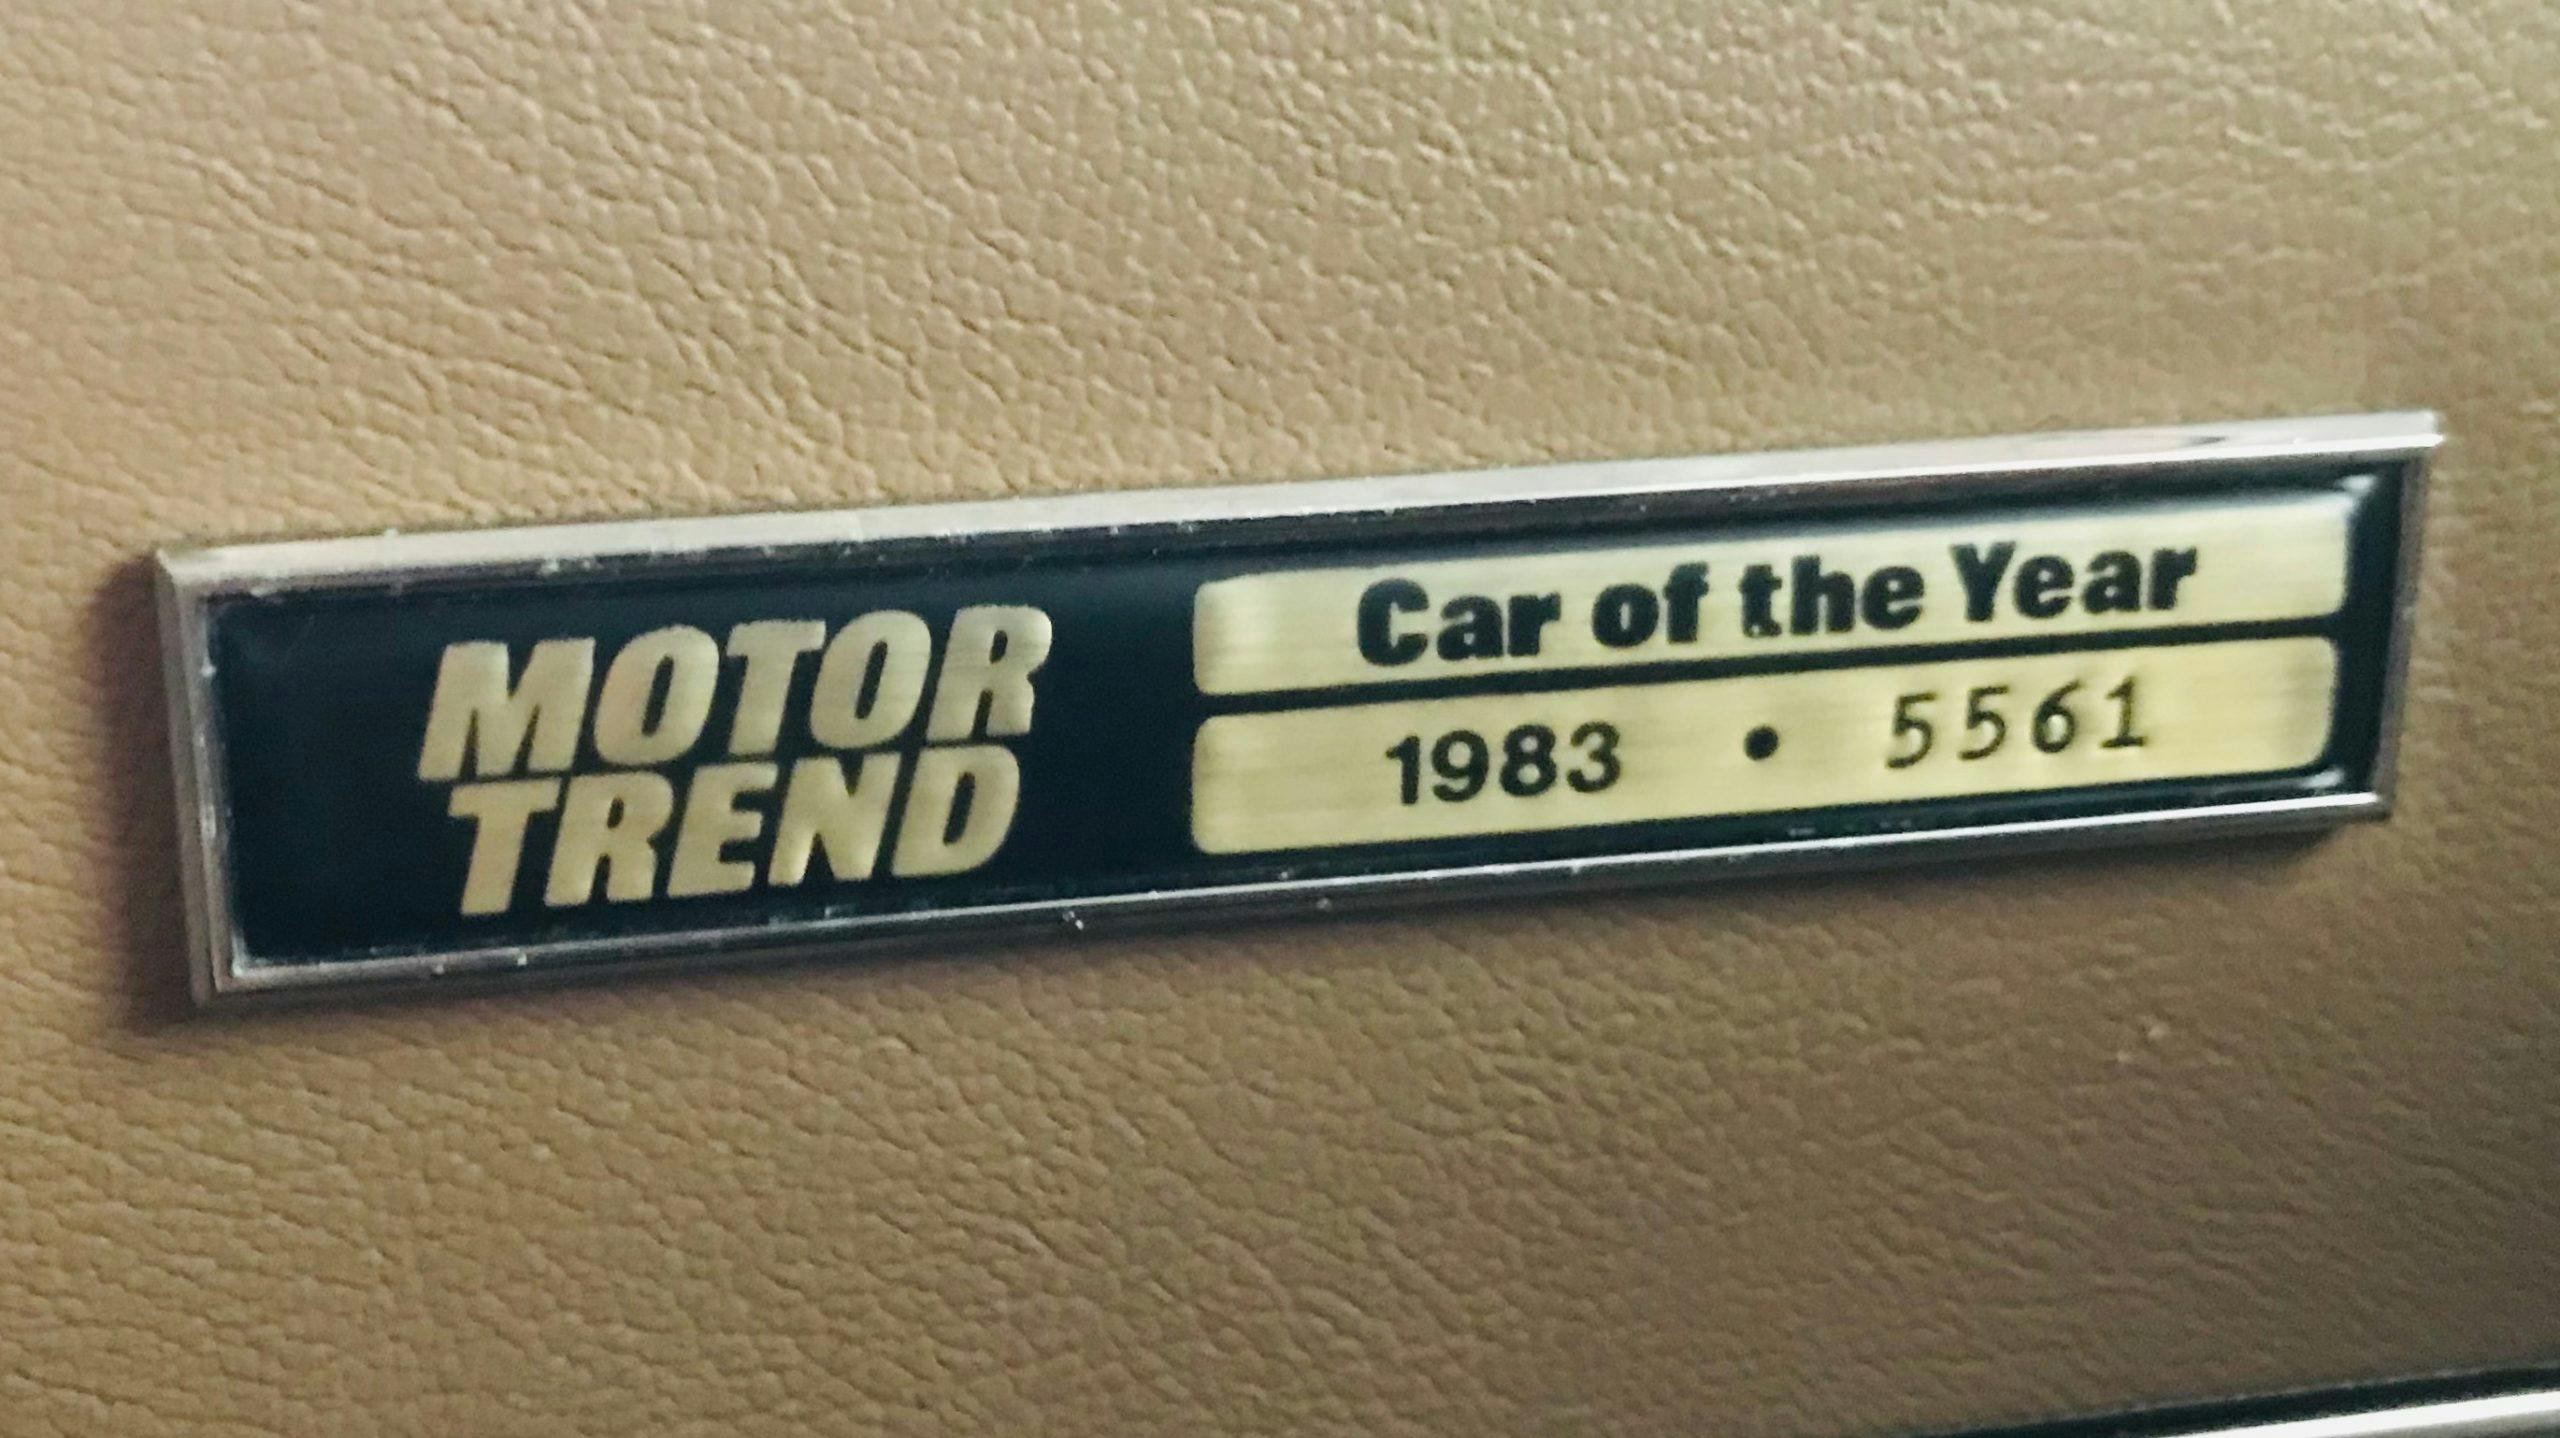 1983 American Motors Alliance motortrend badge